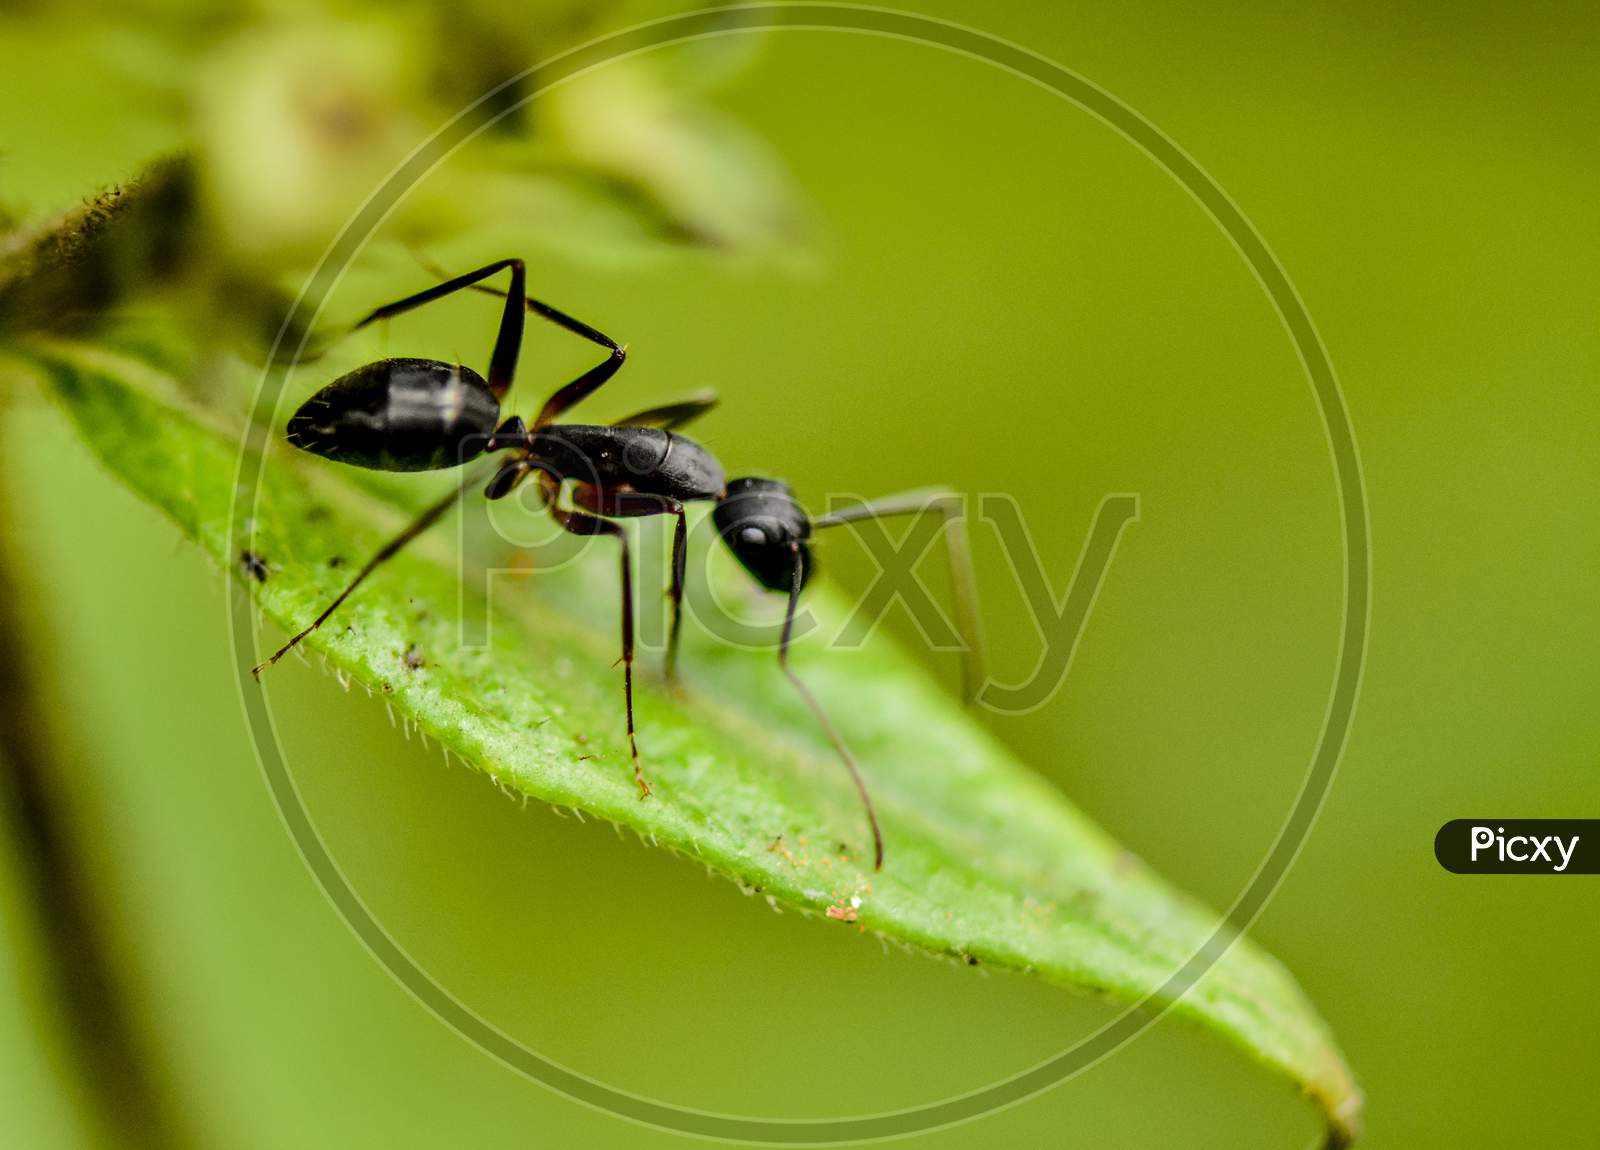 Black Ant on a Leaf